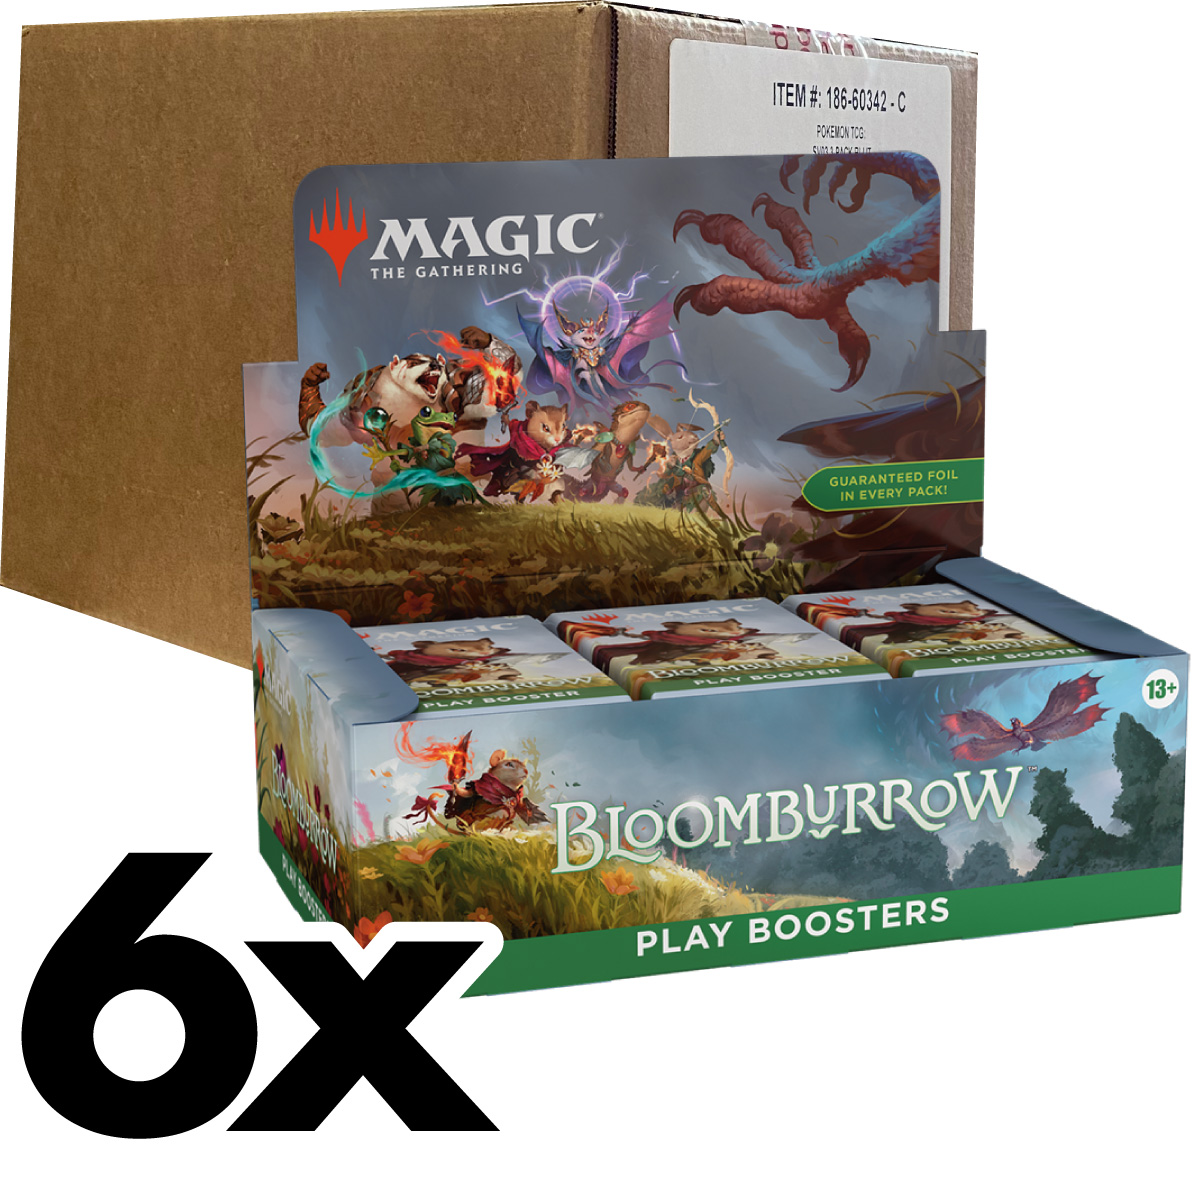 magic the gathering - bloomburrow - busta di gioco - case sigillato 6x box 36 buste (eng)